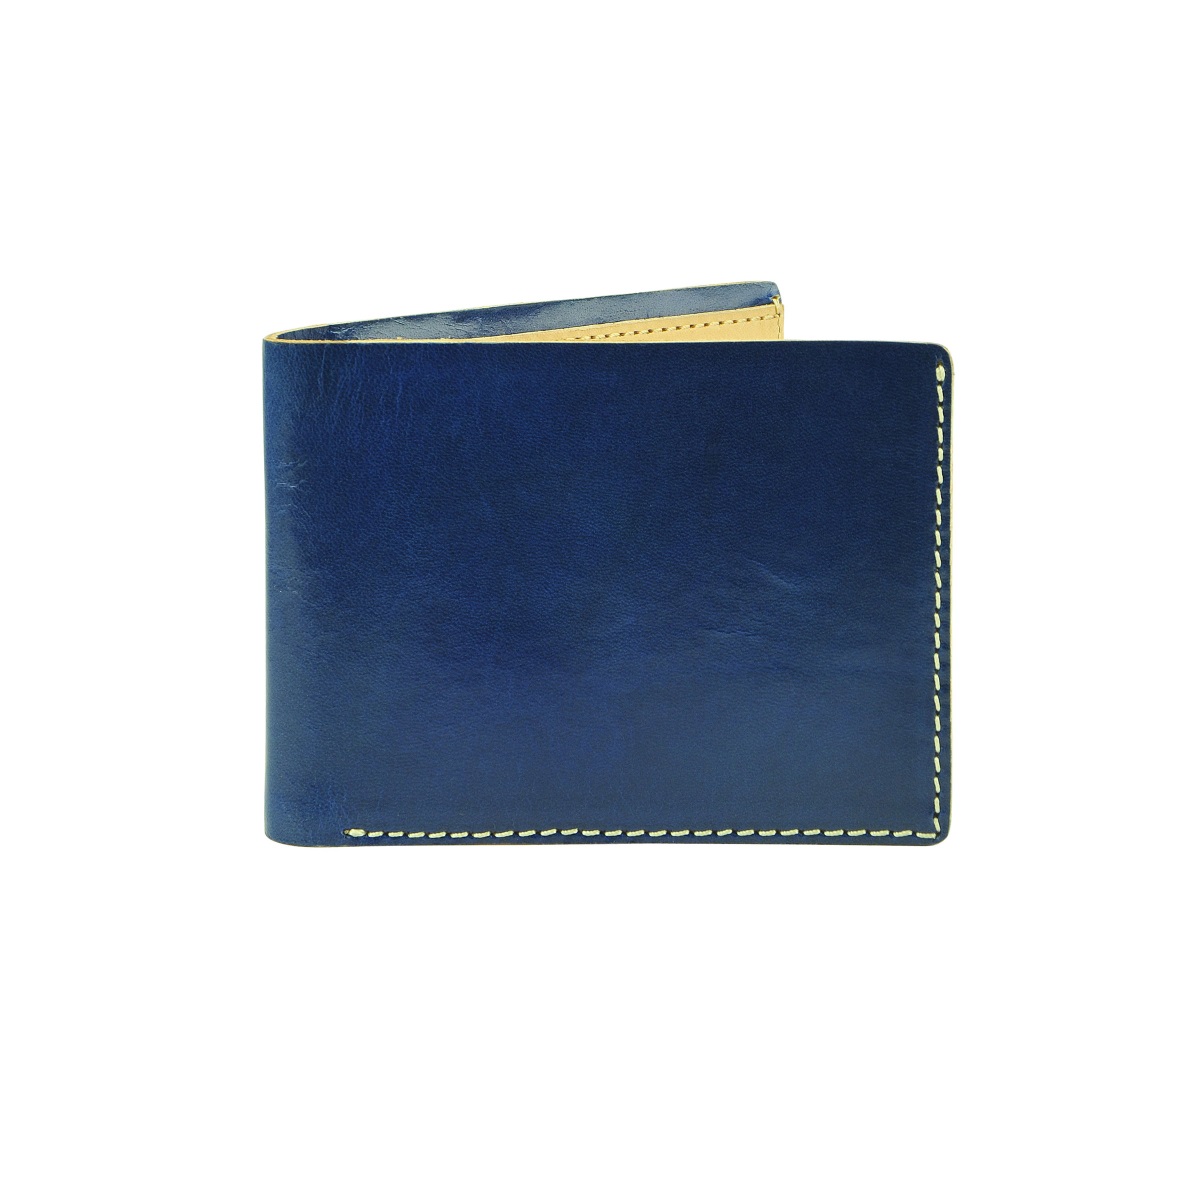 J.FOLD SuperGlaze Leather Wallet